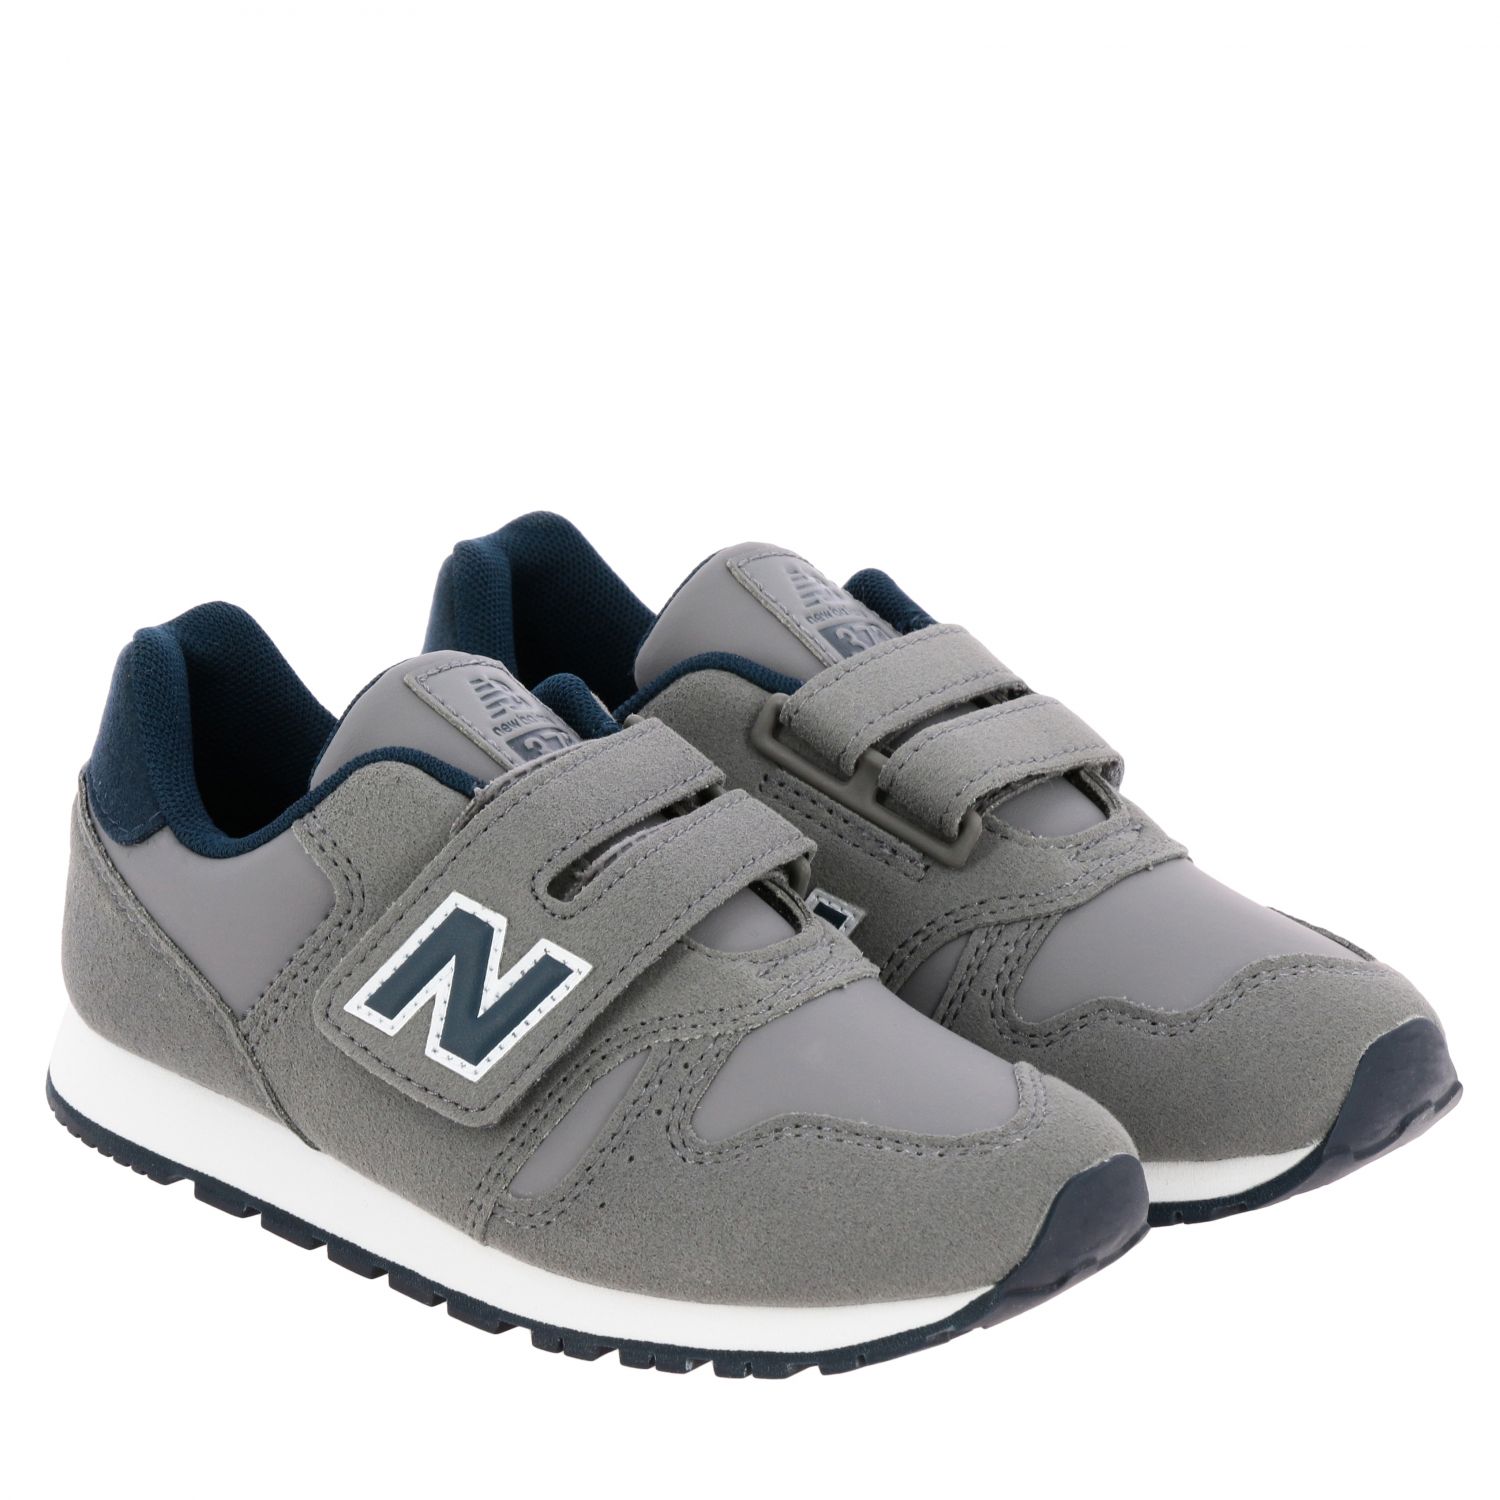 Shoes New Balance Kids Grey 